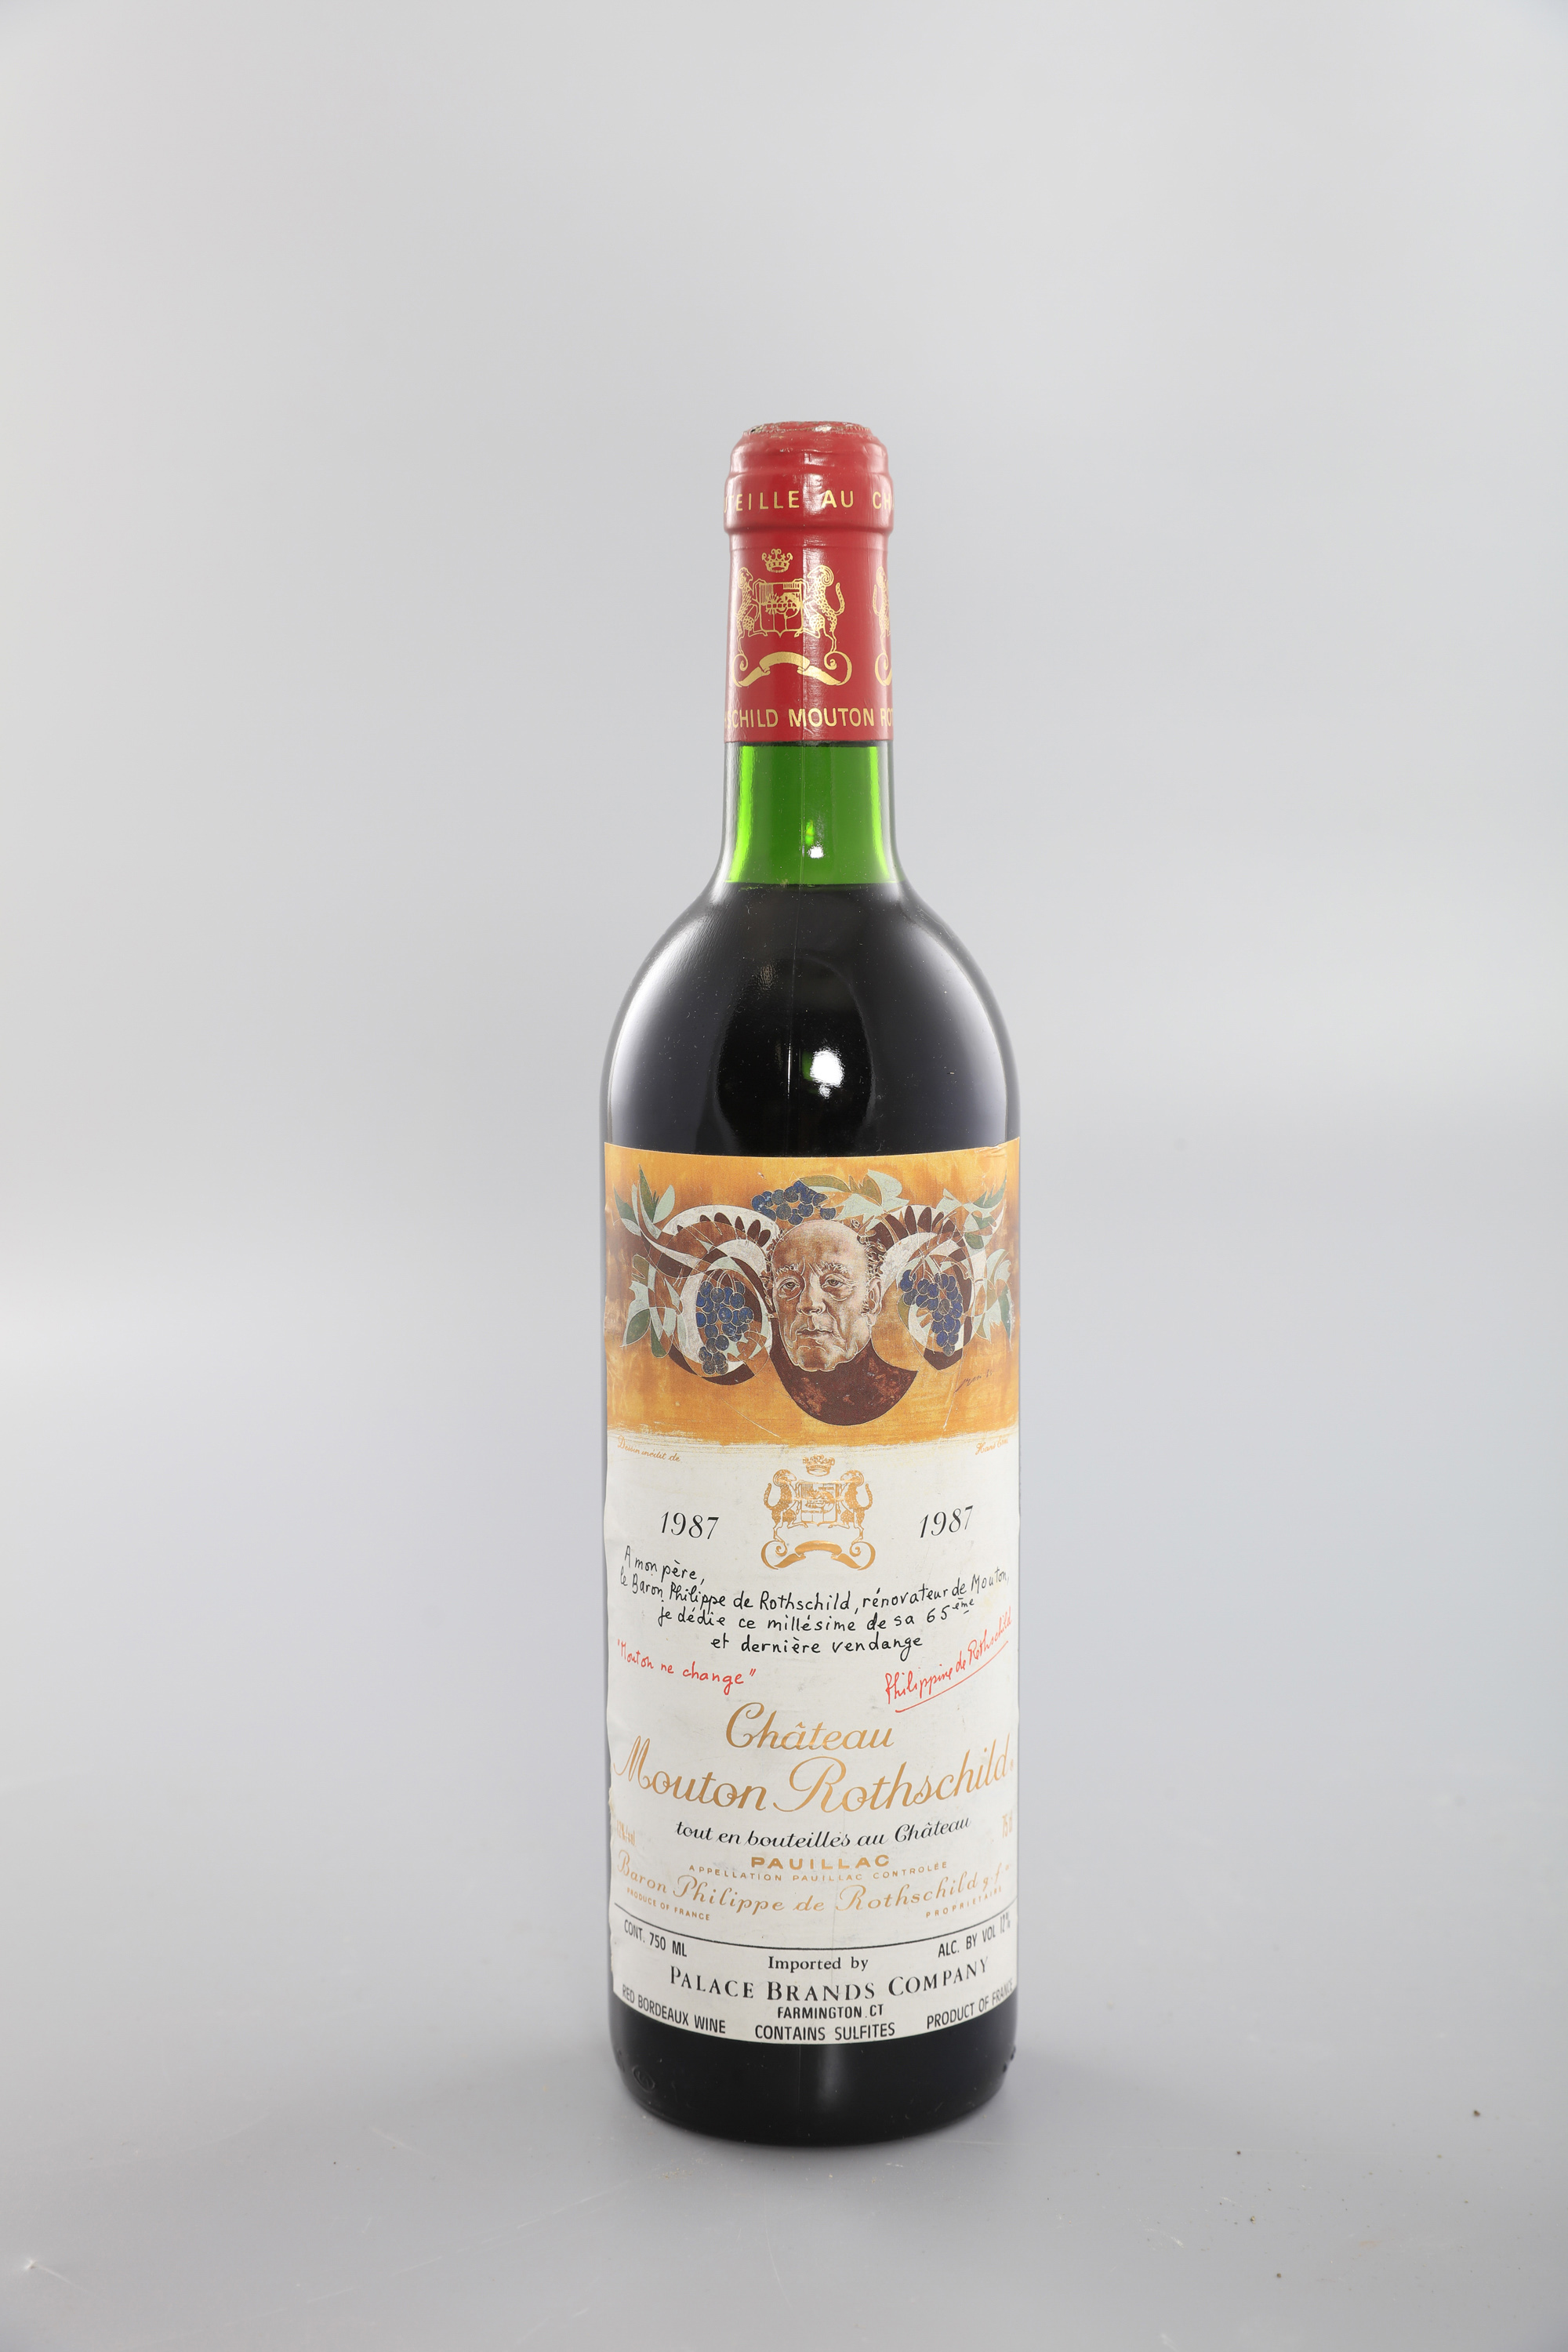 CHATEAU MOUTON ROTHSCHILD Pauillac, 1987 1 bottle - Image 4 of 4